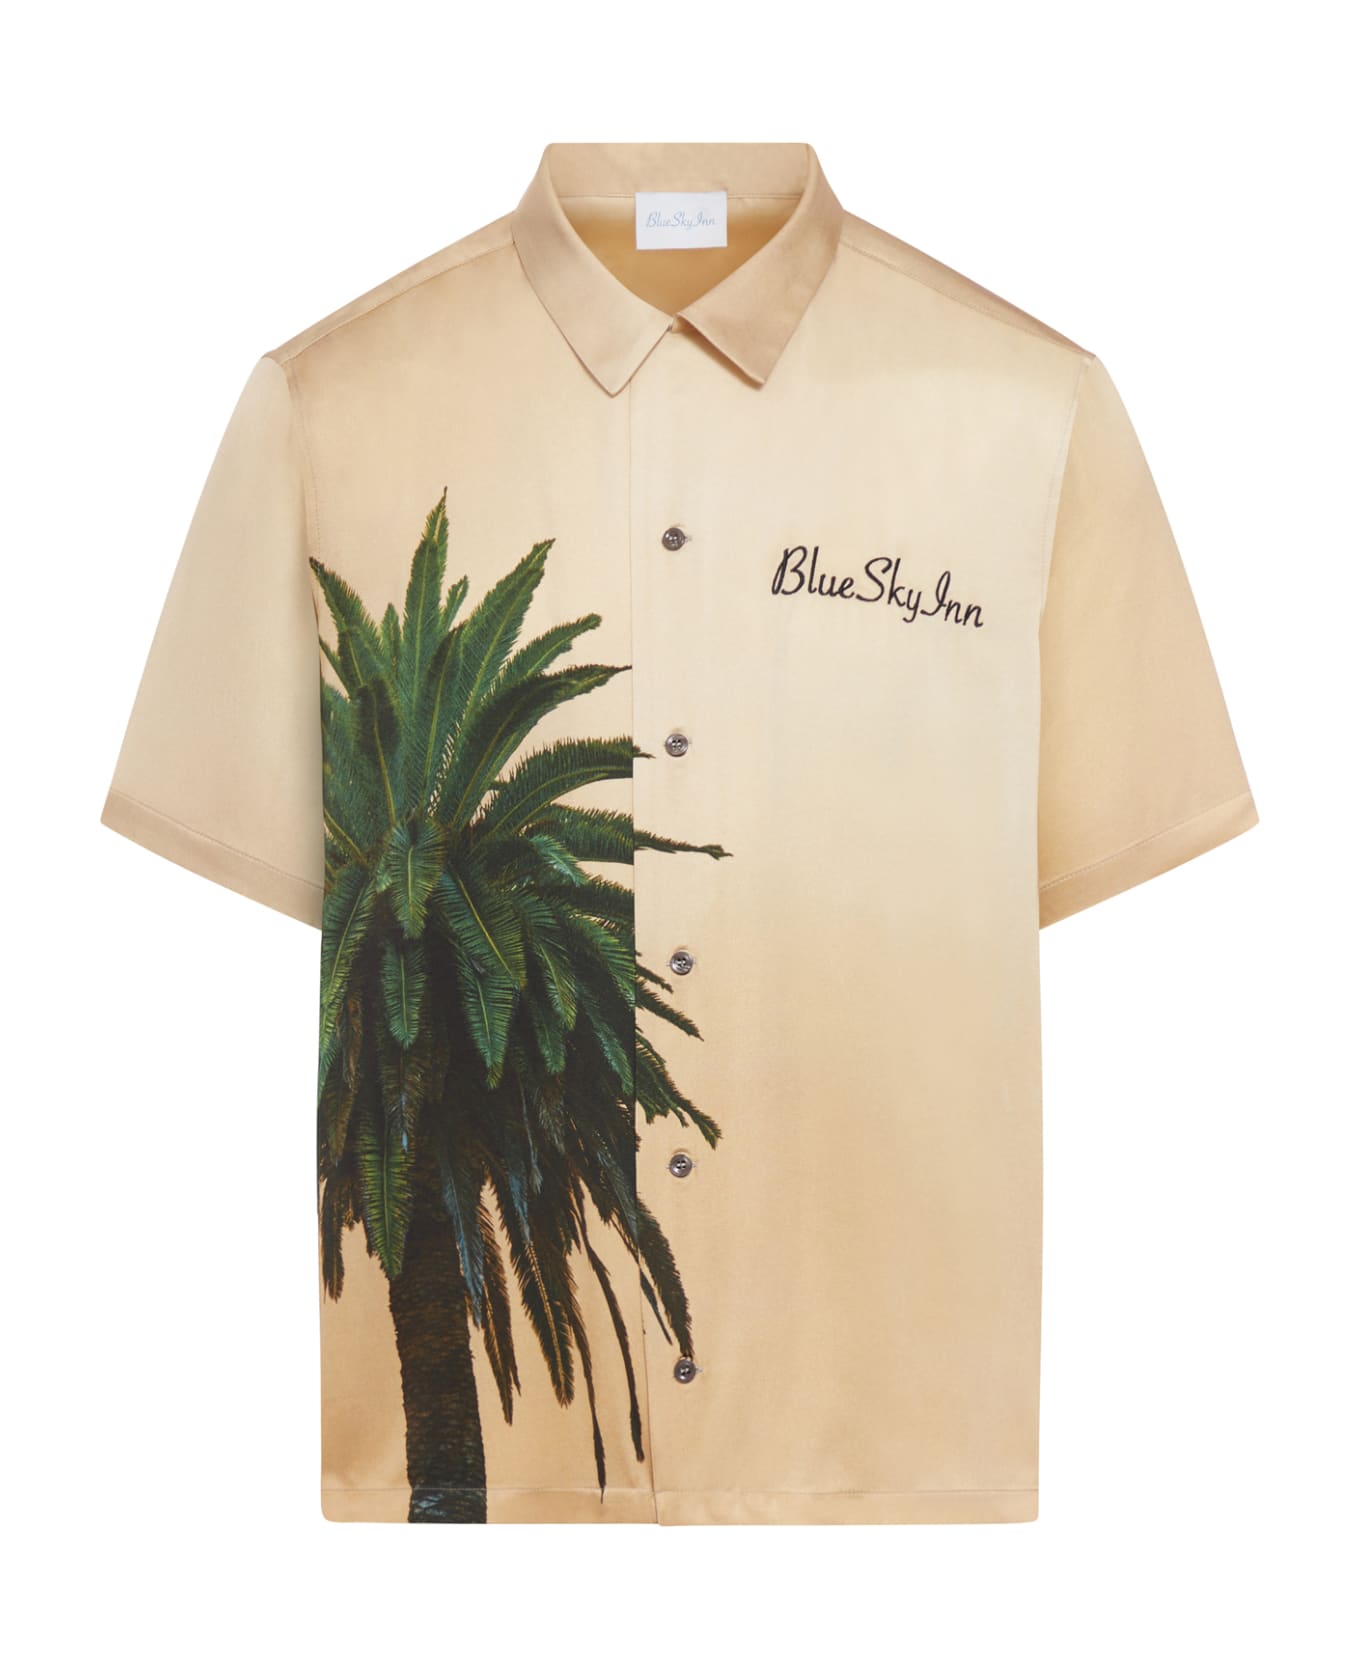 Blue Sky Inn Royal Palm Shirt - Travis Scott Fragment Air Jordan 1 Low Shirts